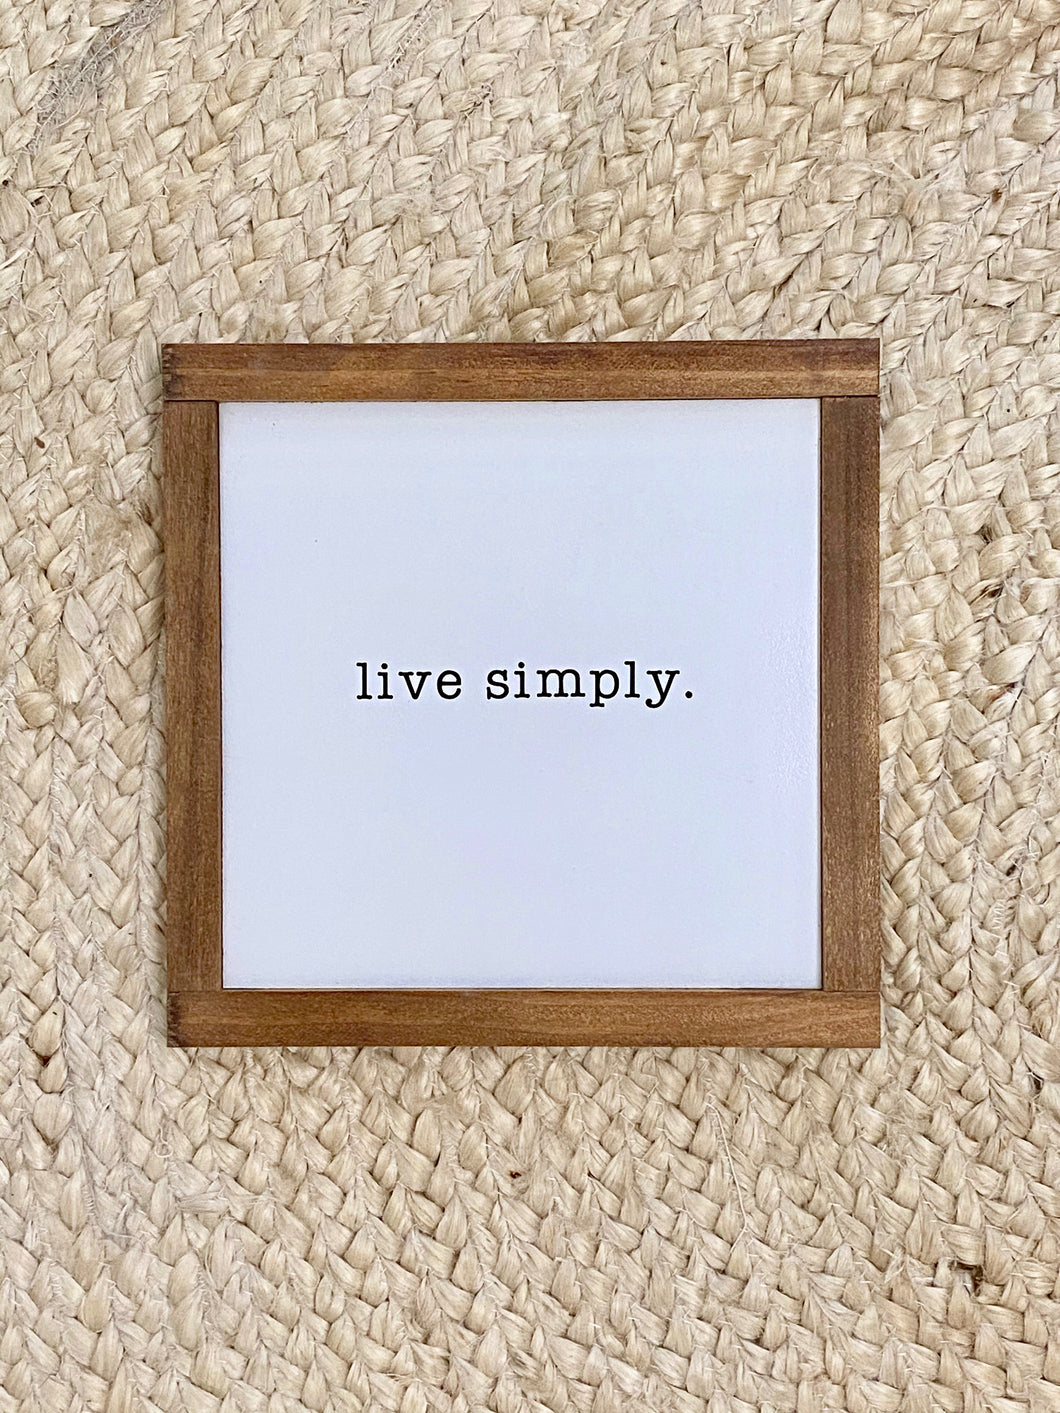 LIVE SIMPLY.